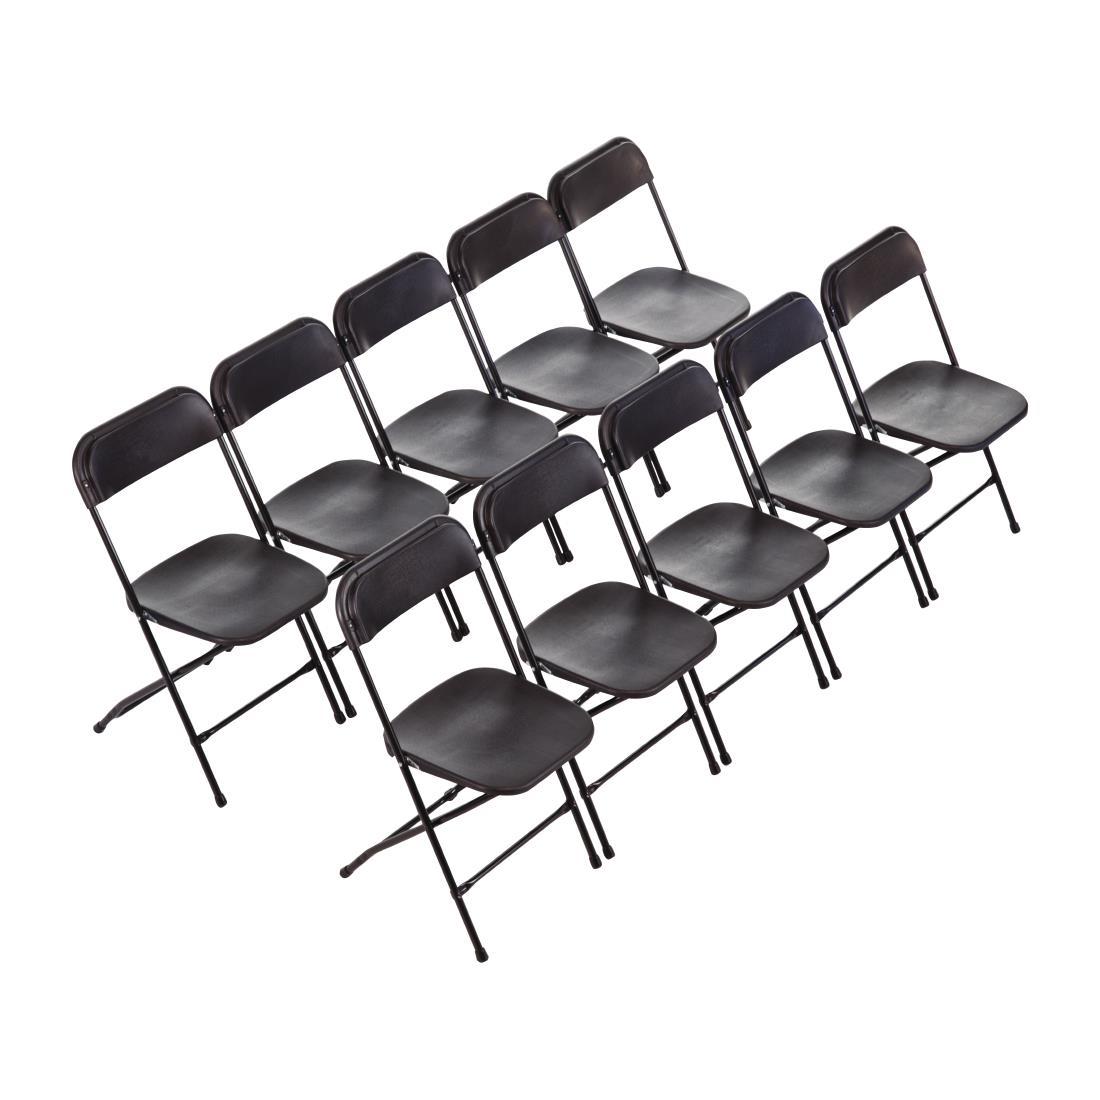 Bolero PP Folding Chairs Black (Pack of 10) - GD386  - 3